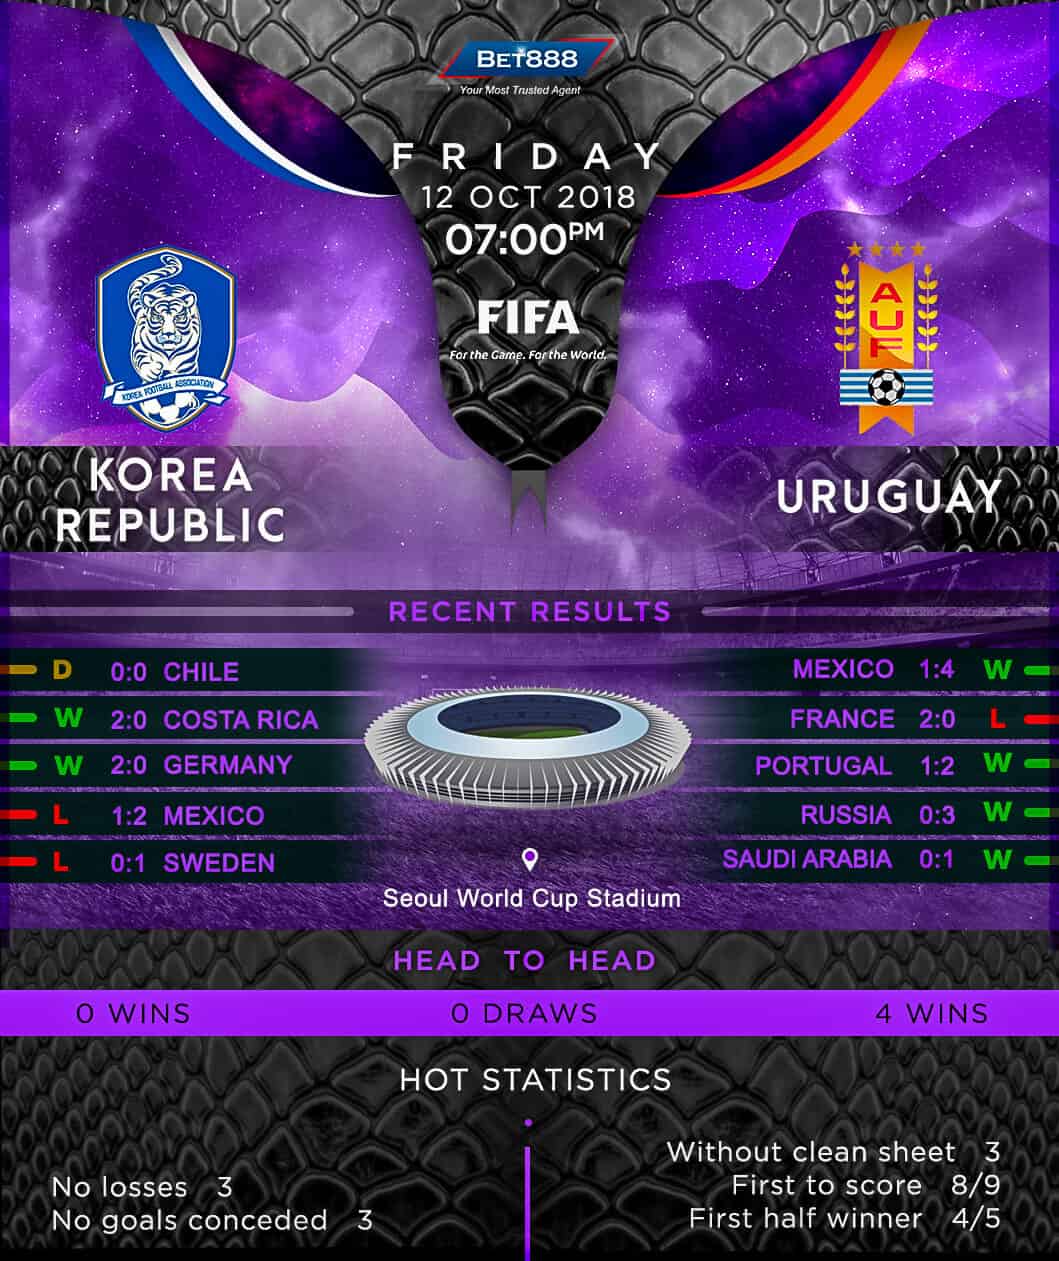 South Korea vs Uruguay 12/10/18